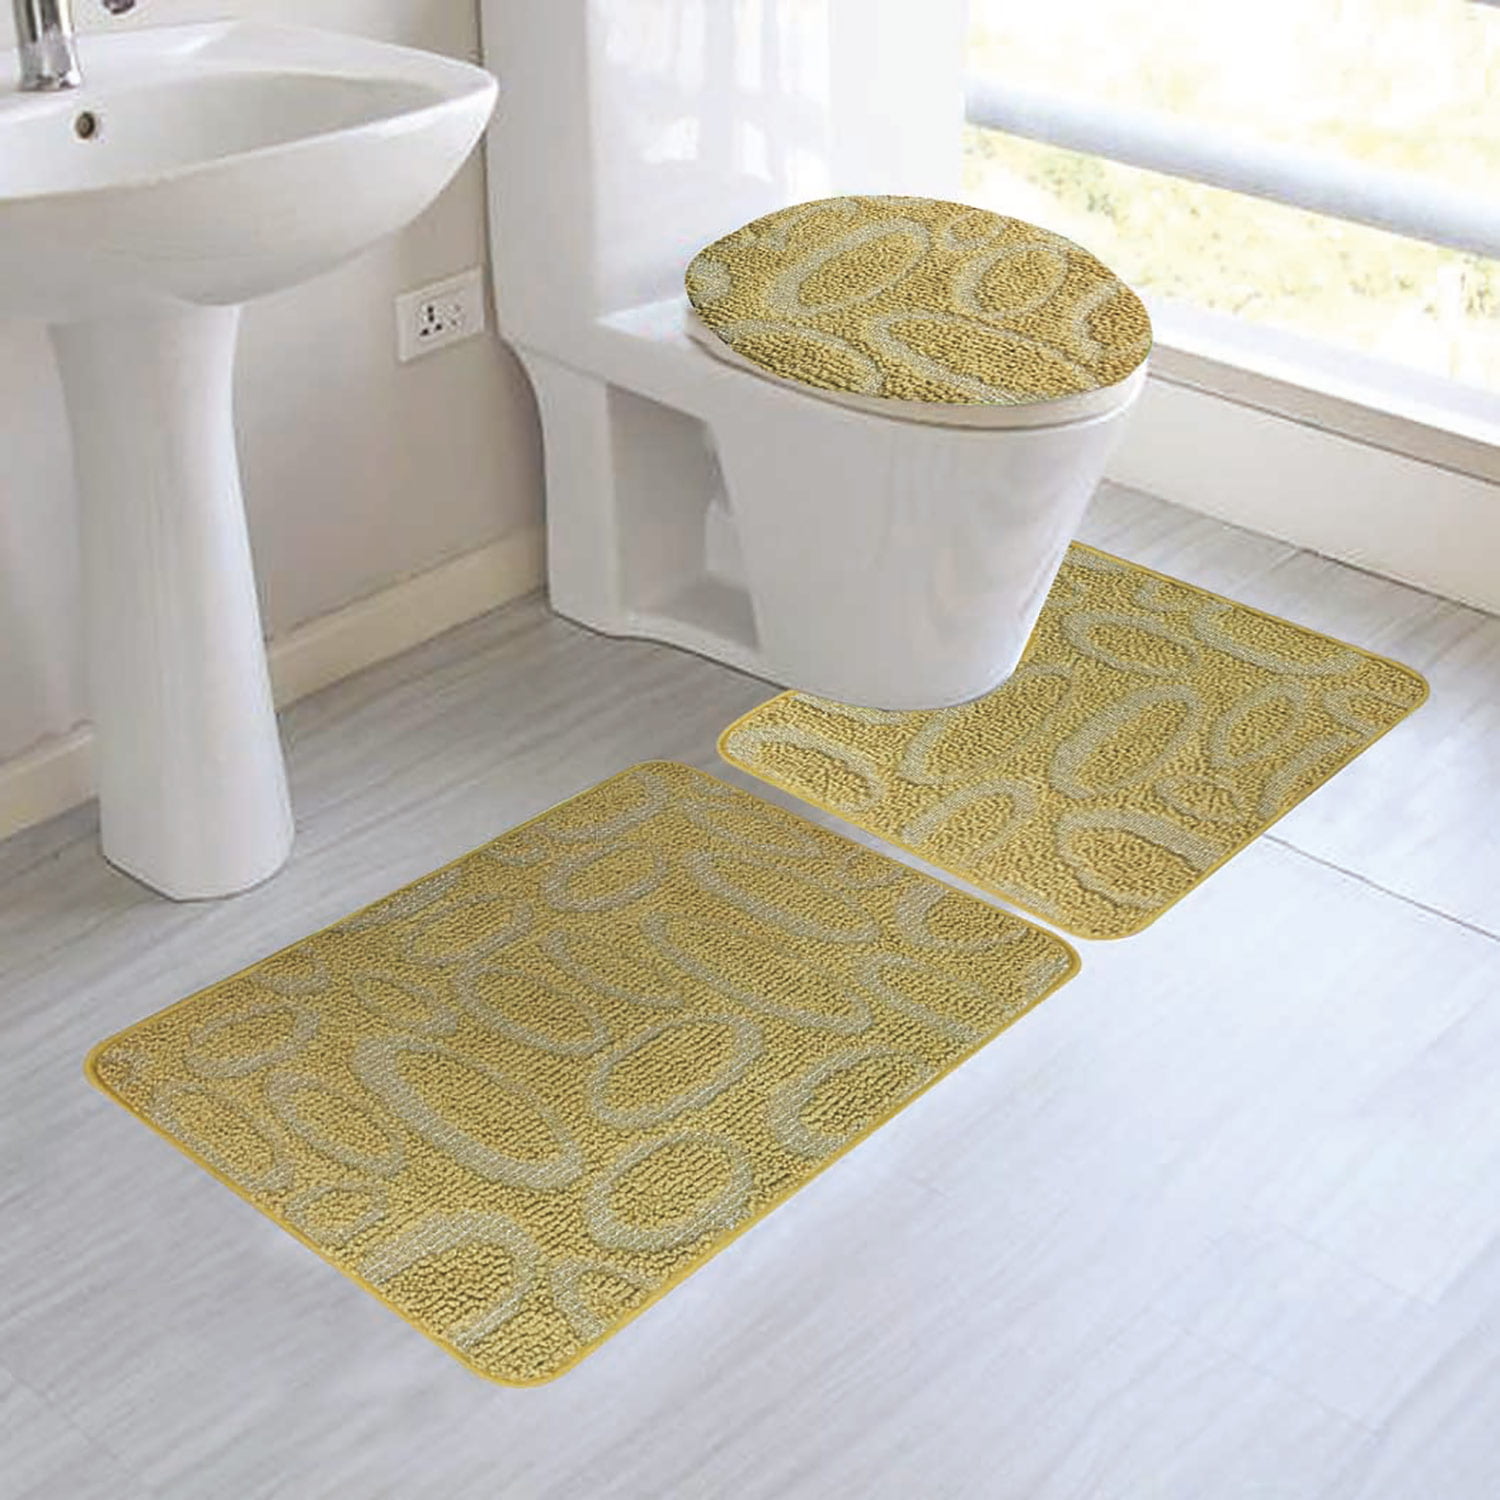 Luxury bath mat sets